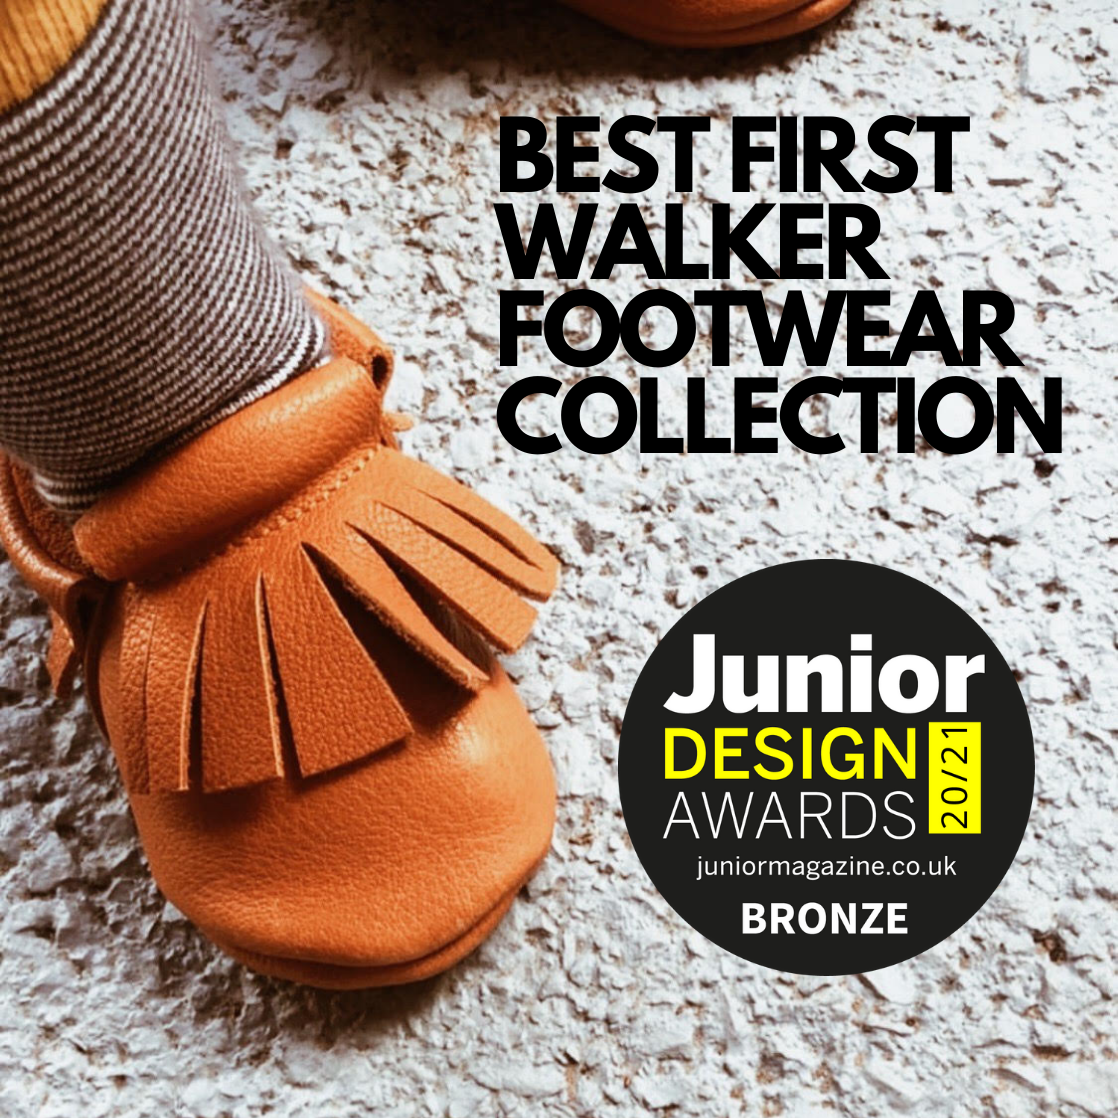 BEST FIRST WALKER FOOTWEAR COLLECTION